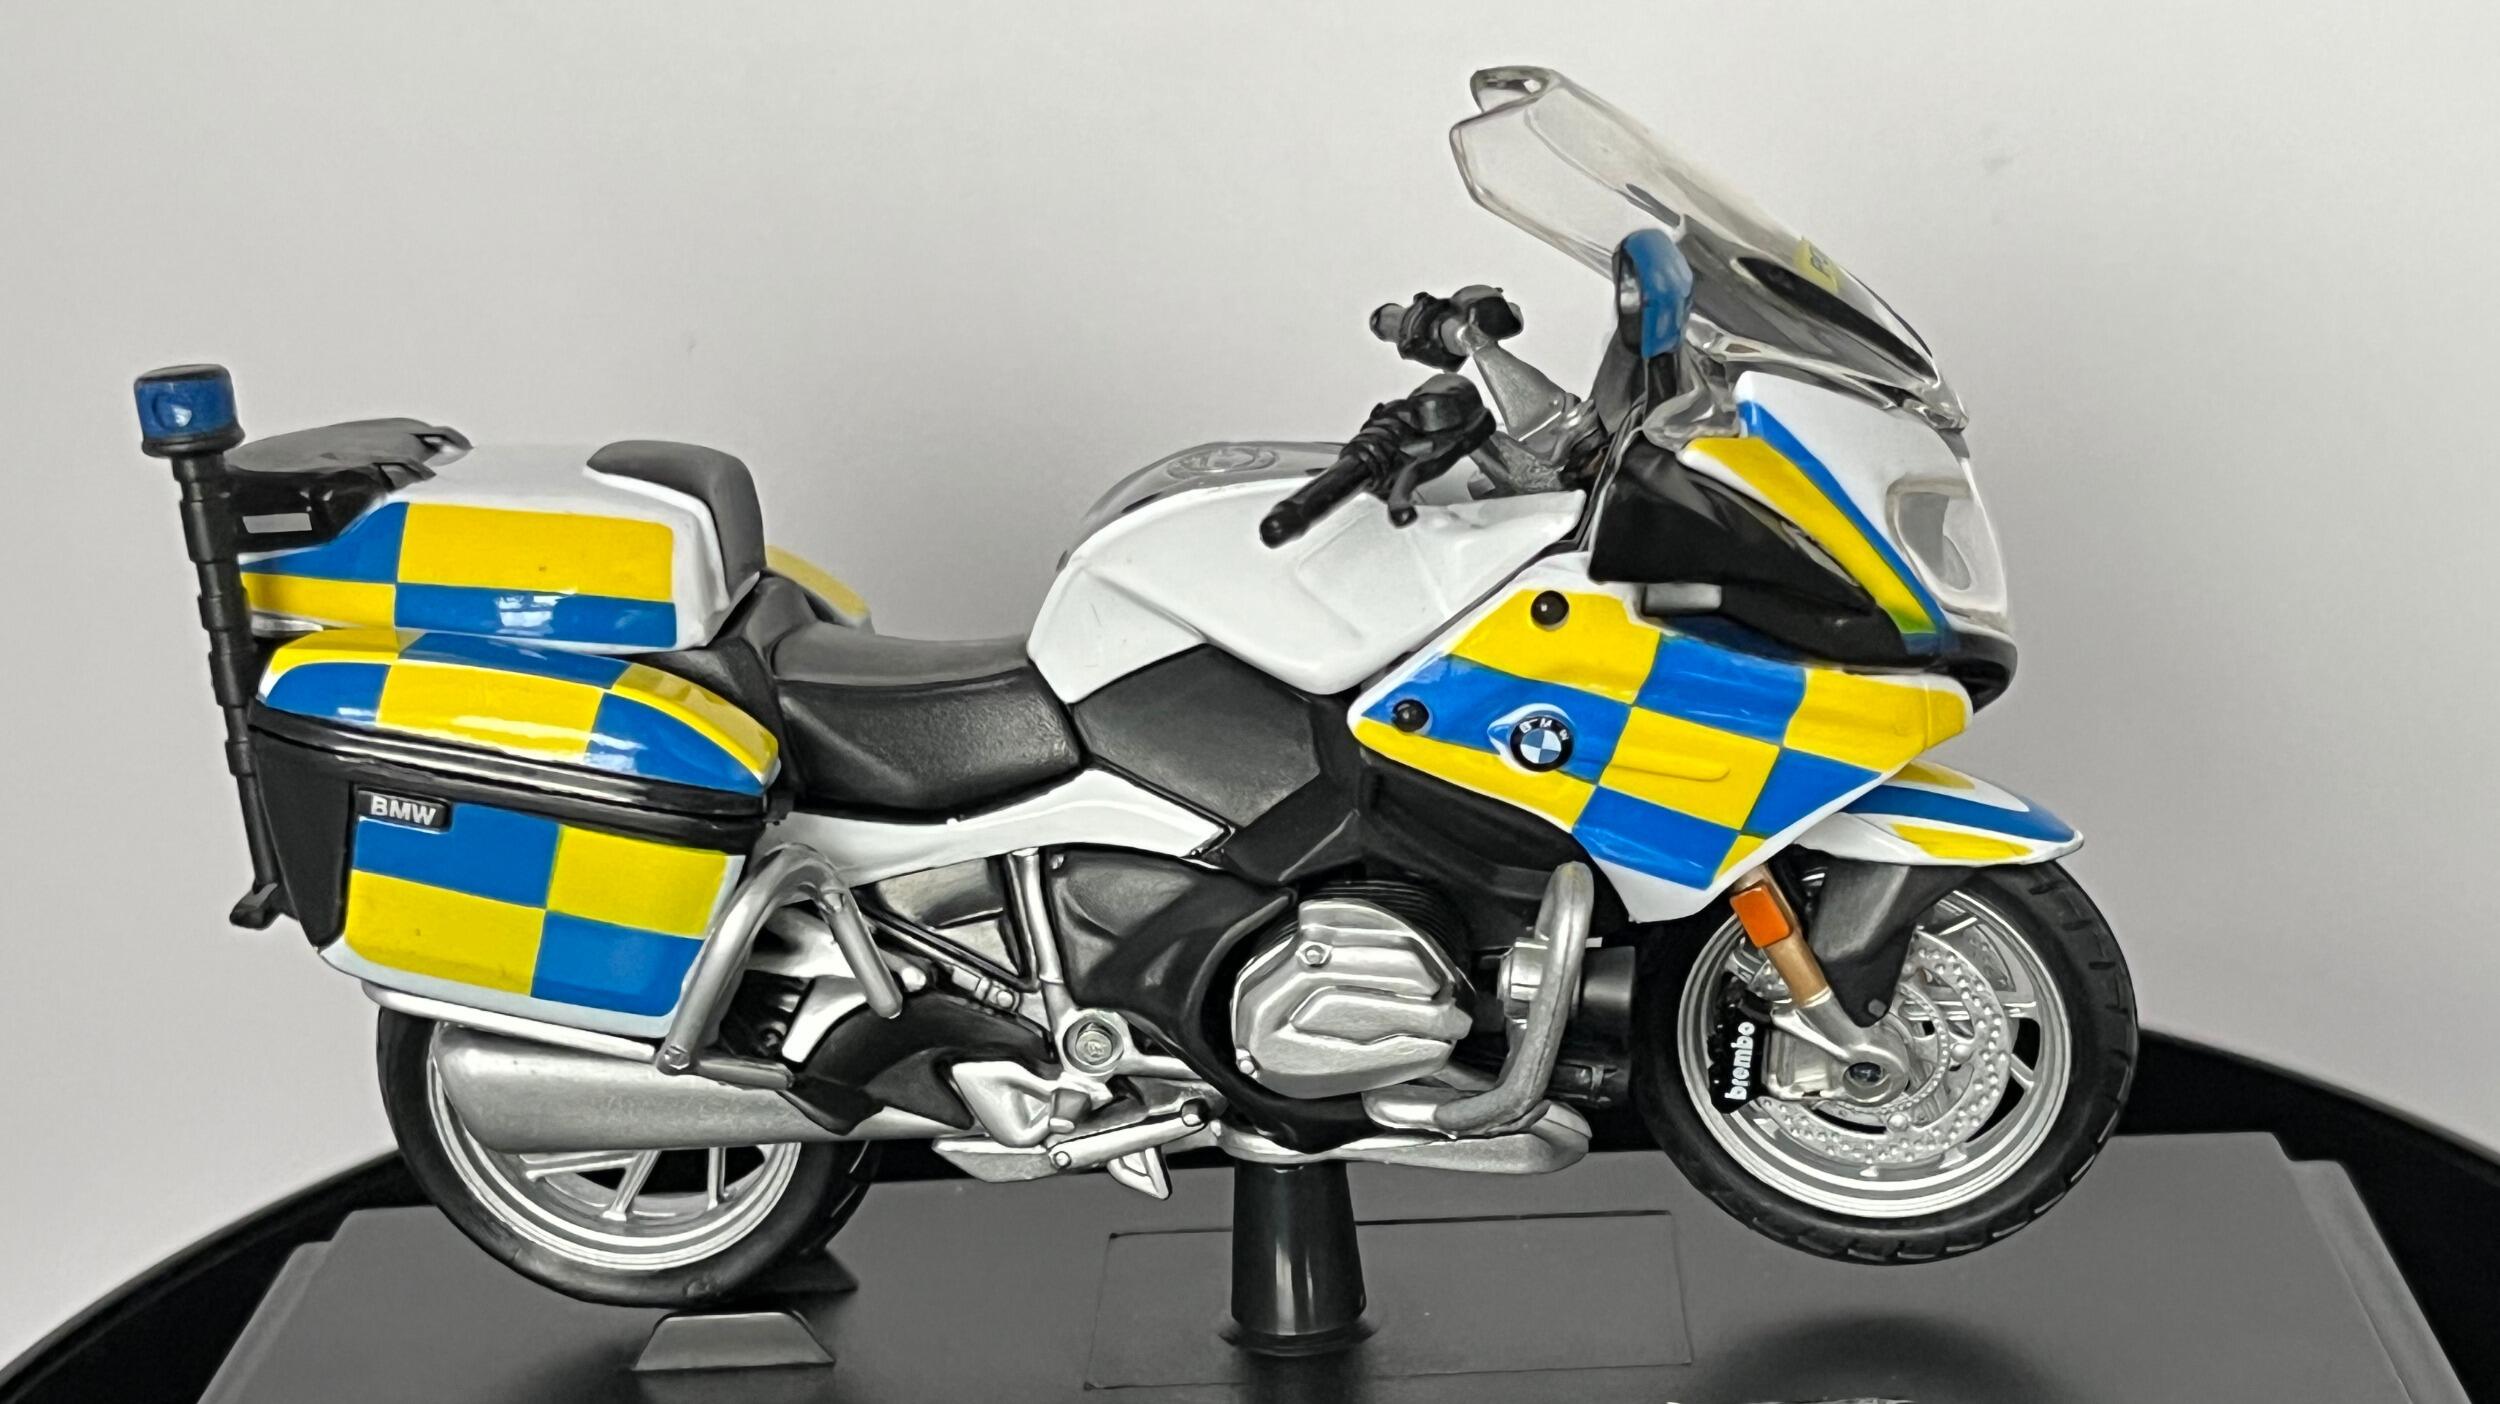 BMW R 1200 RT Police Authority UK, 1:18 scale motorbike model from Maisto, MAi15953